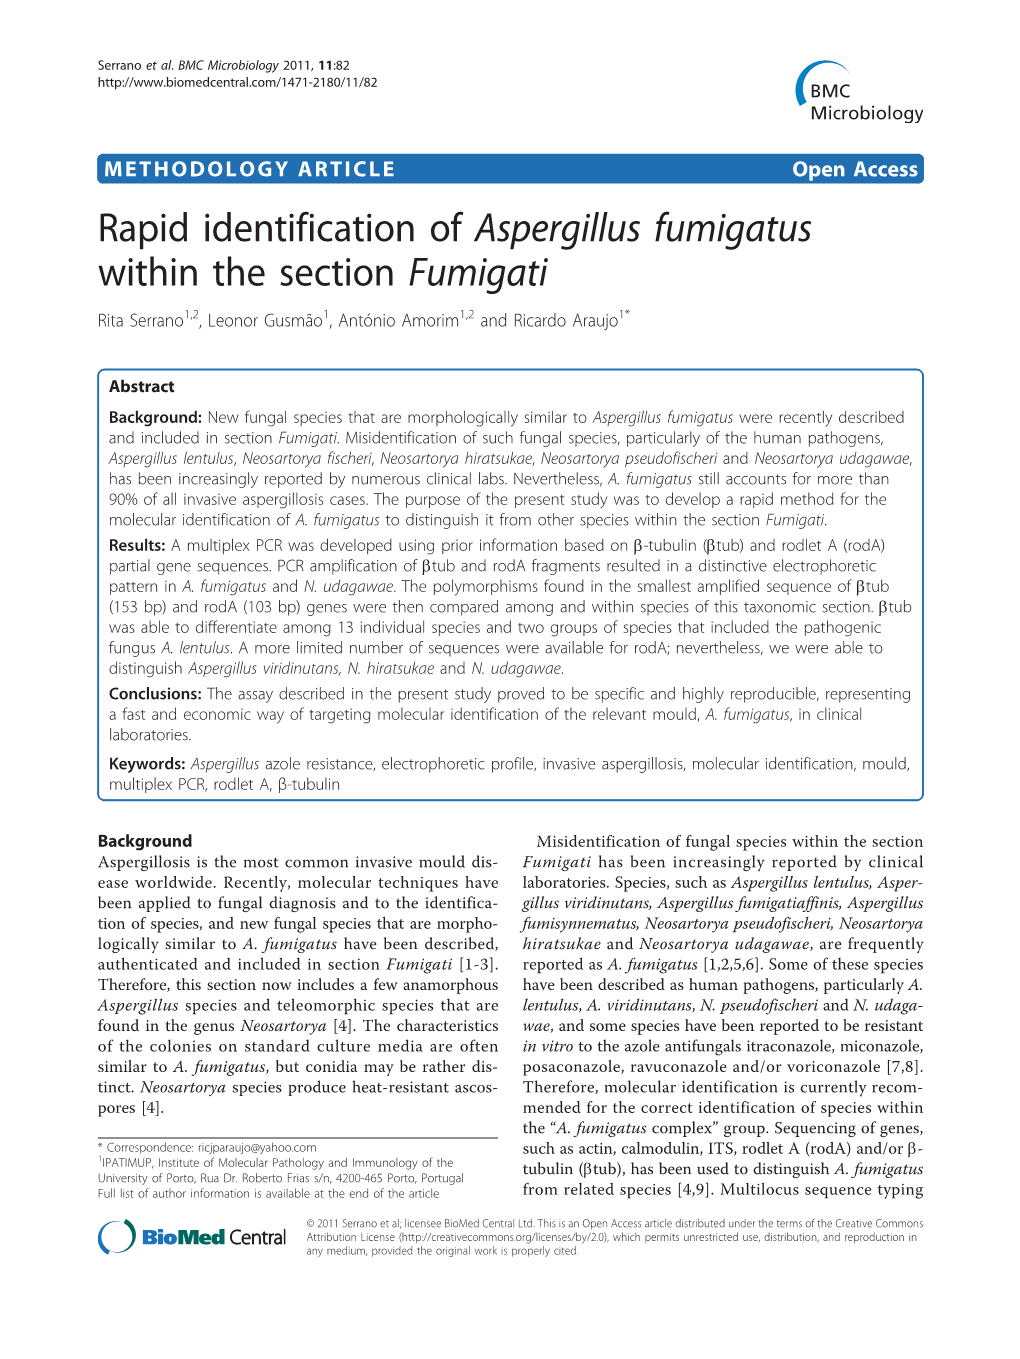 Rapid Identification of Aspergillus Fumigatus Within the Section Fumigati Rita Serrano1,2, Leonor Gusmão1, António Amorim1,2 and Ricardo Araujo1*